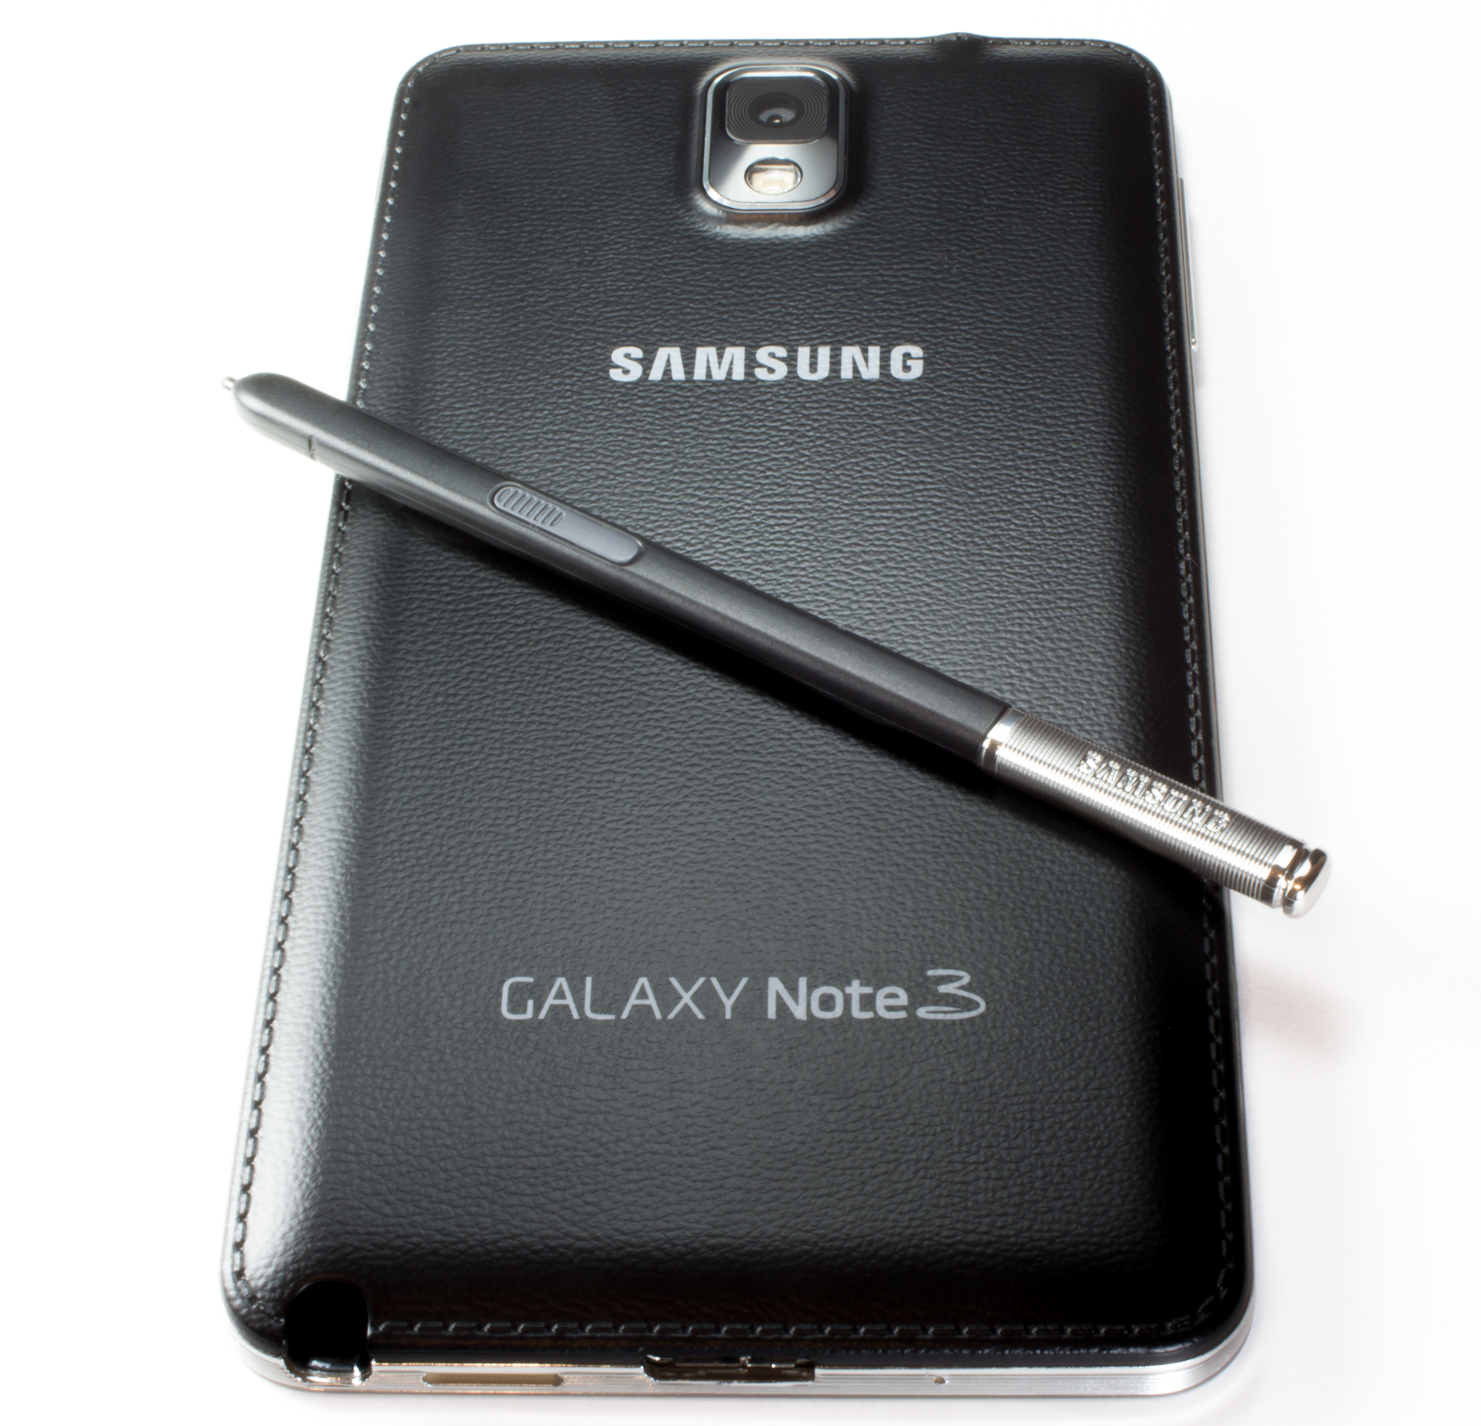 Galaxy s note. Самсунг ноут 3. Samsung Galaxy s3 Note. Самсунг галакси Note 3s. Samsung Galaxy Note 3 стилус.